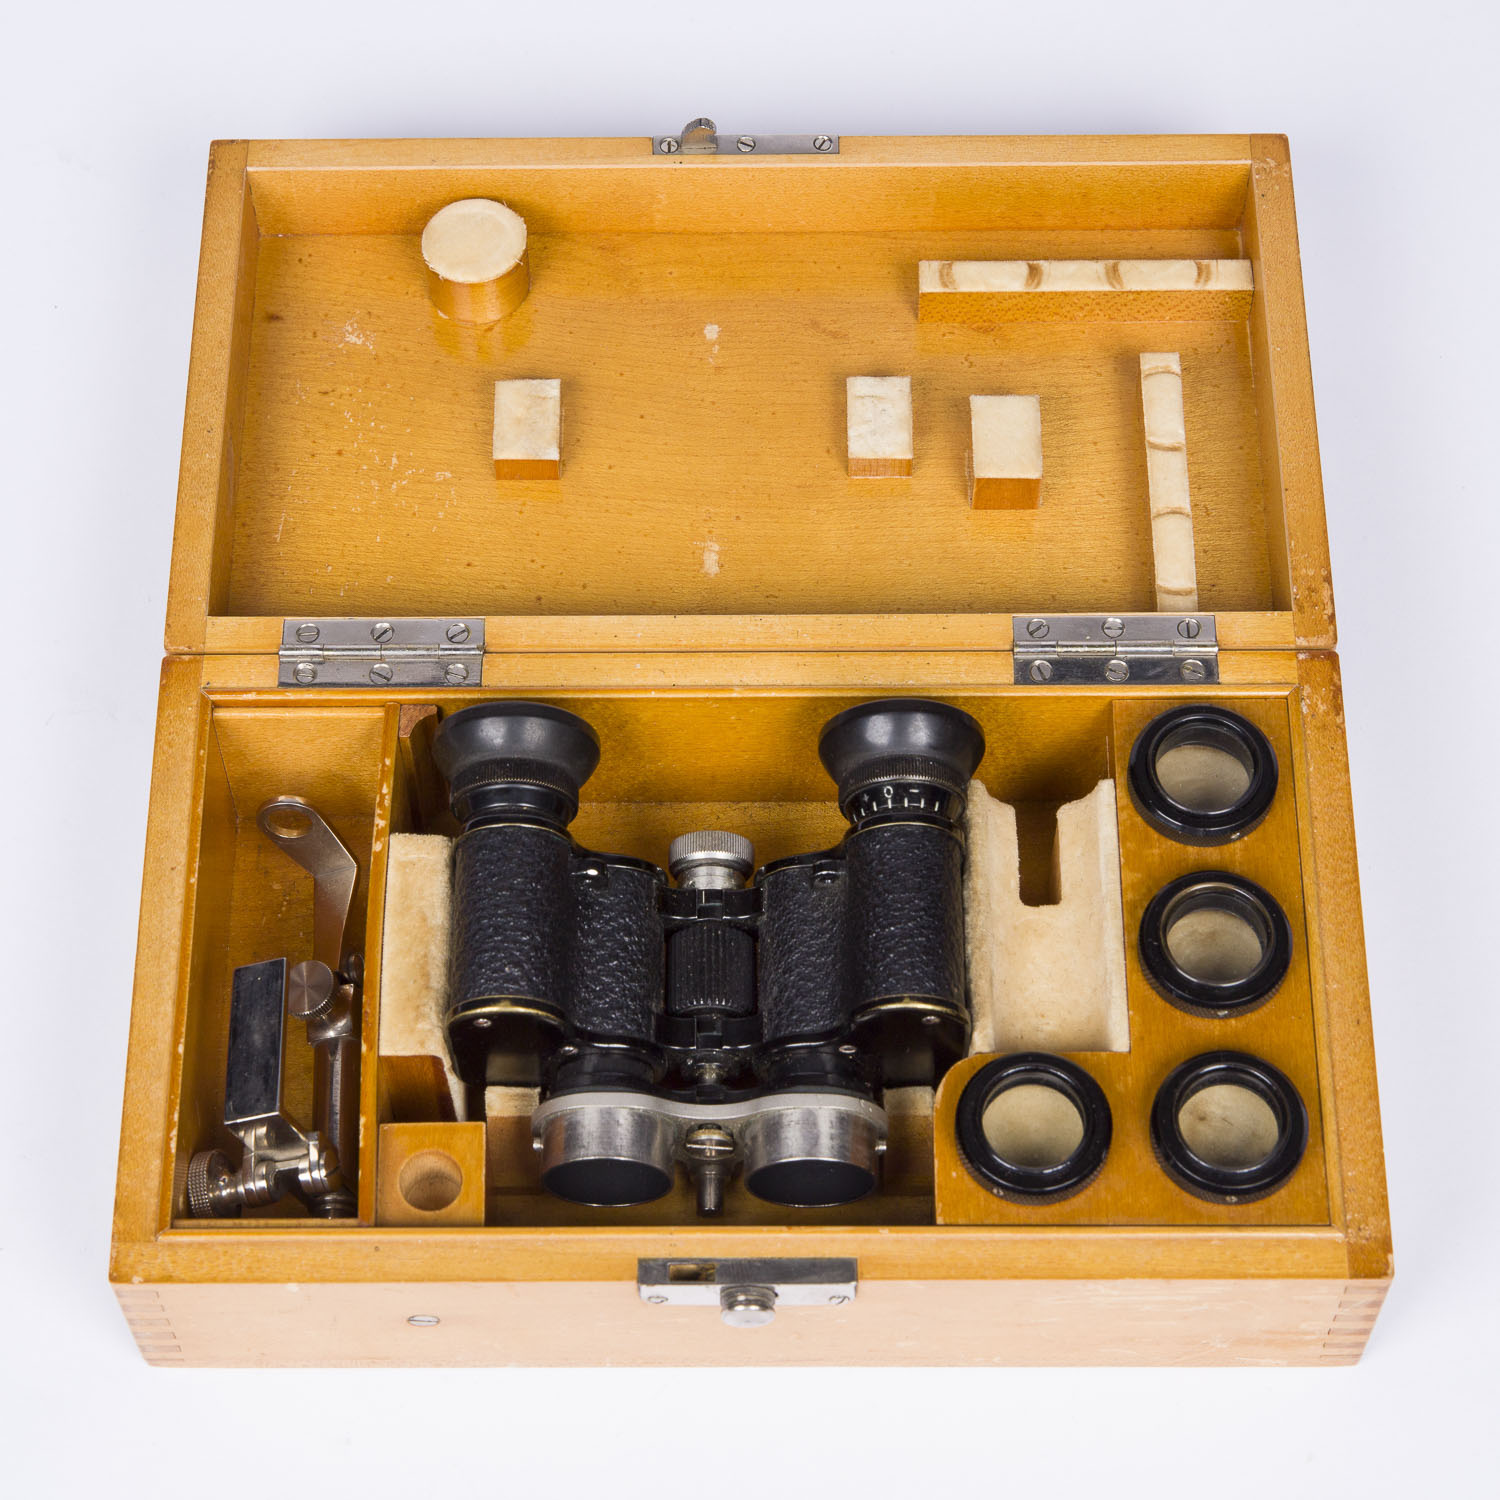 6 x 15 binocular magnifier by Carl Zeiss Jena